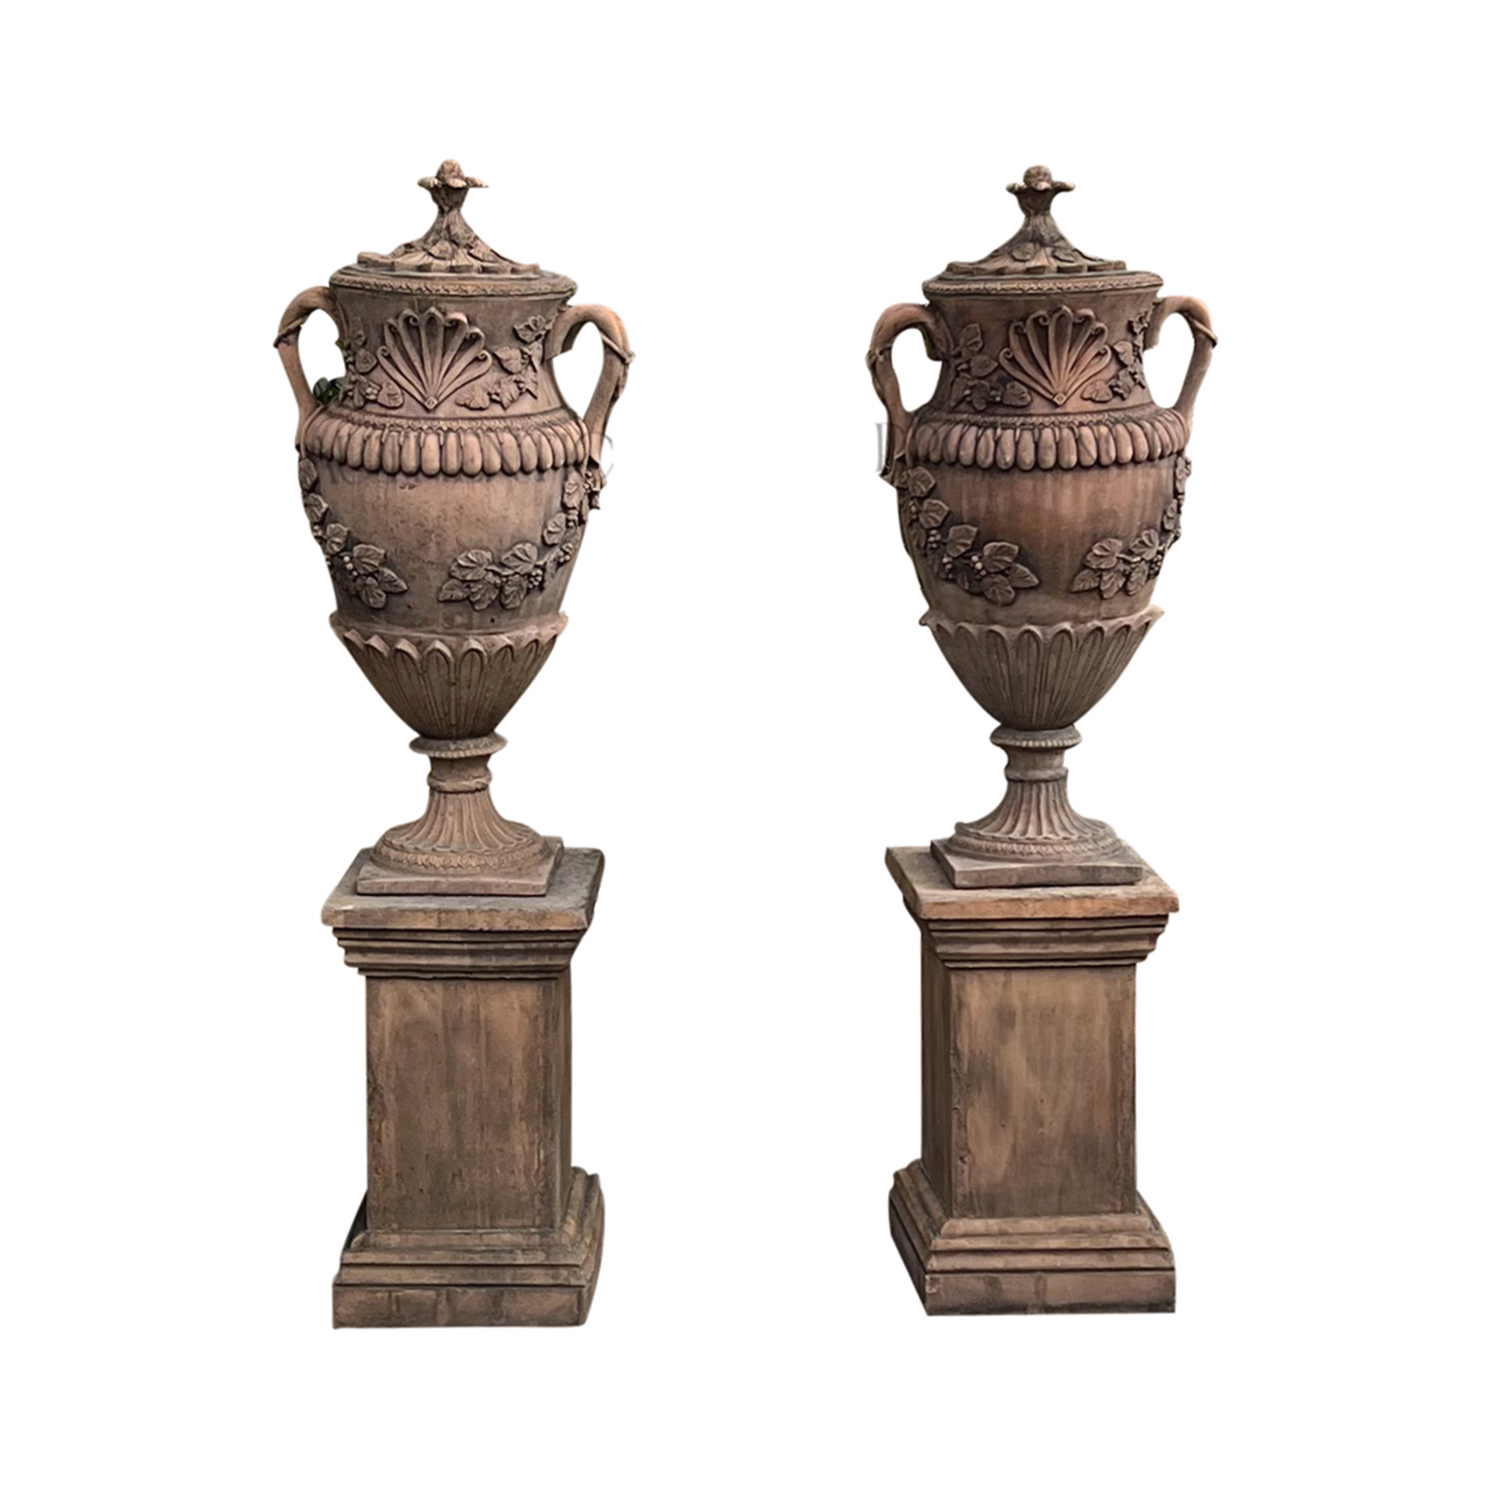 A Pair of Vintage English Garden Urns with Pedestals